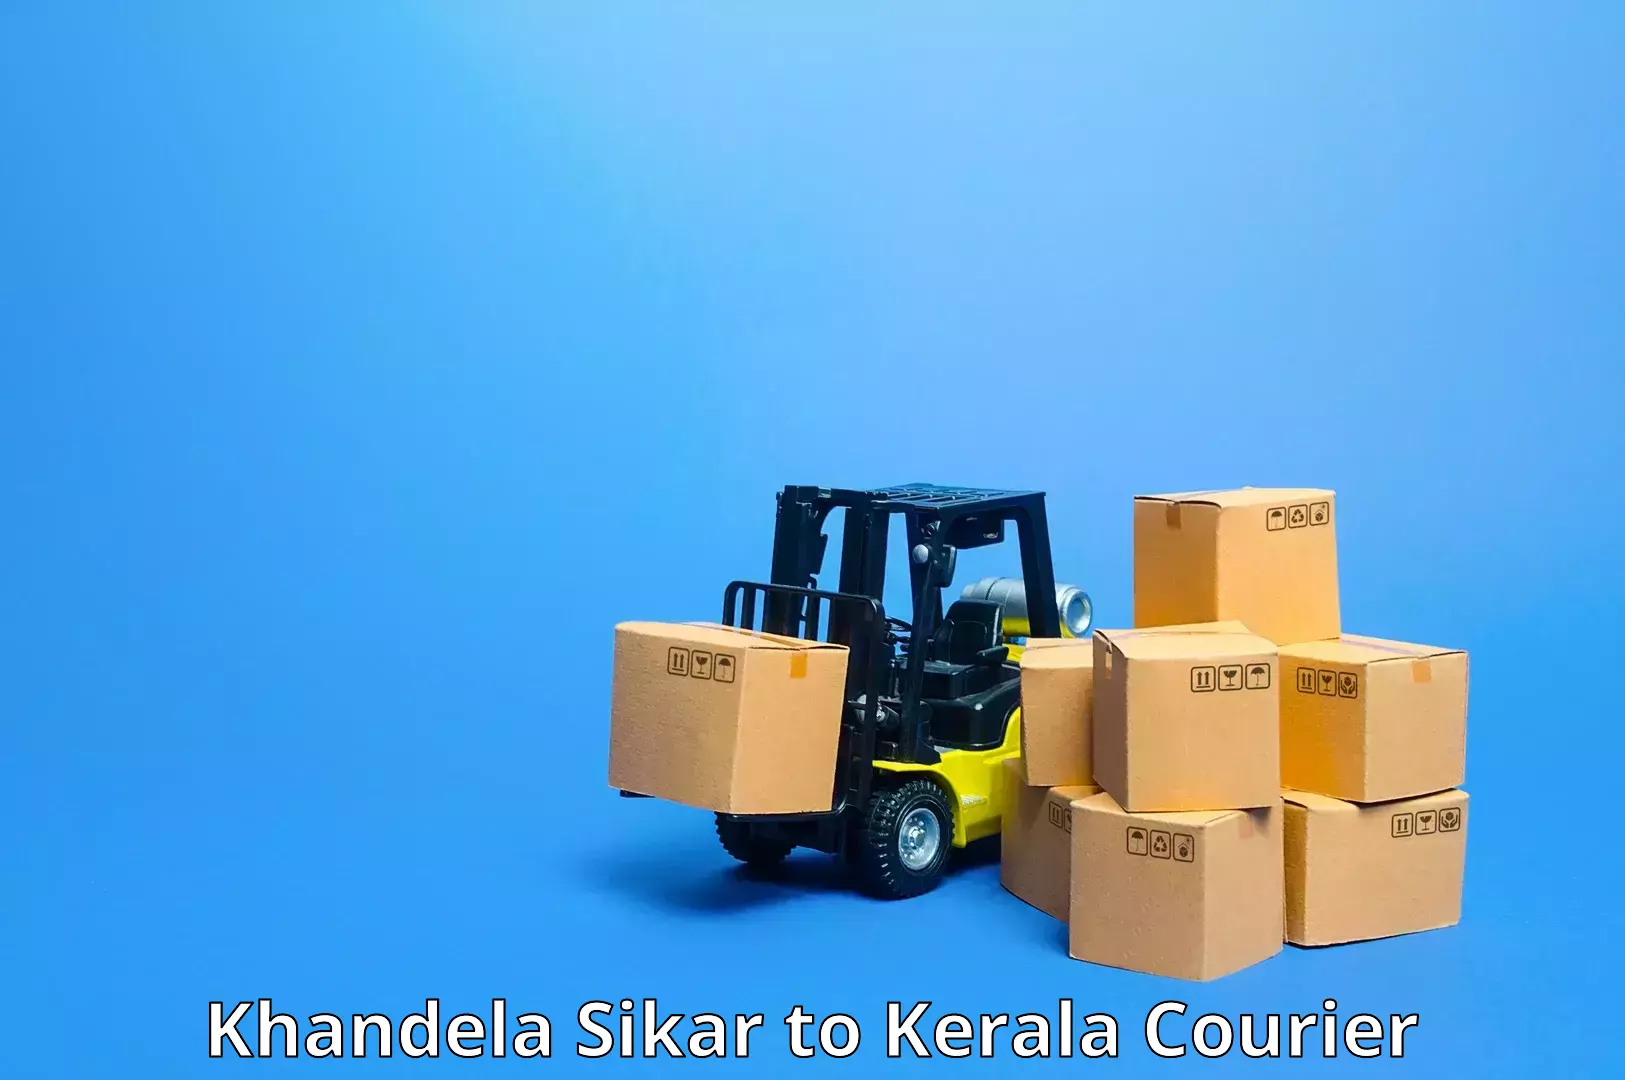 Premium courier services Khandela Sikar to Kottayam